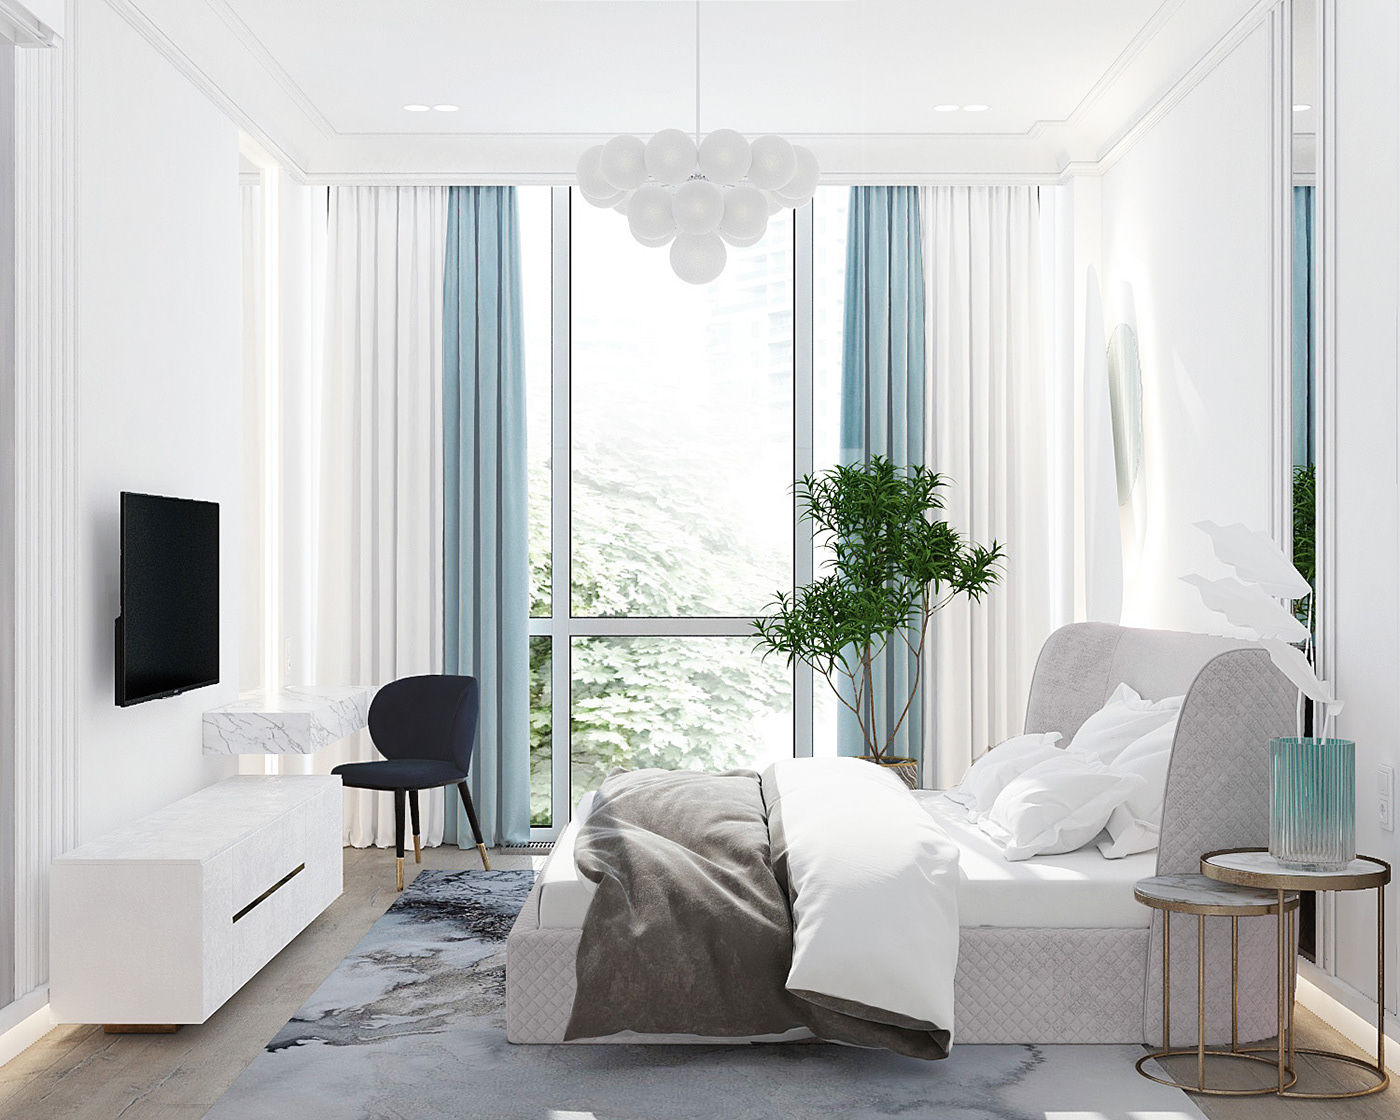 3D 3dmodel apartement architecture interior design  INTERIOR RENDERING Render Residential interior visualization visualization3d